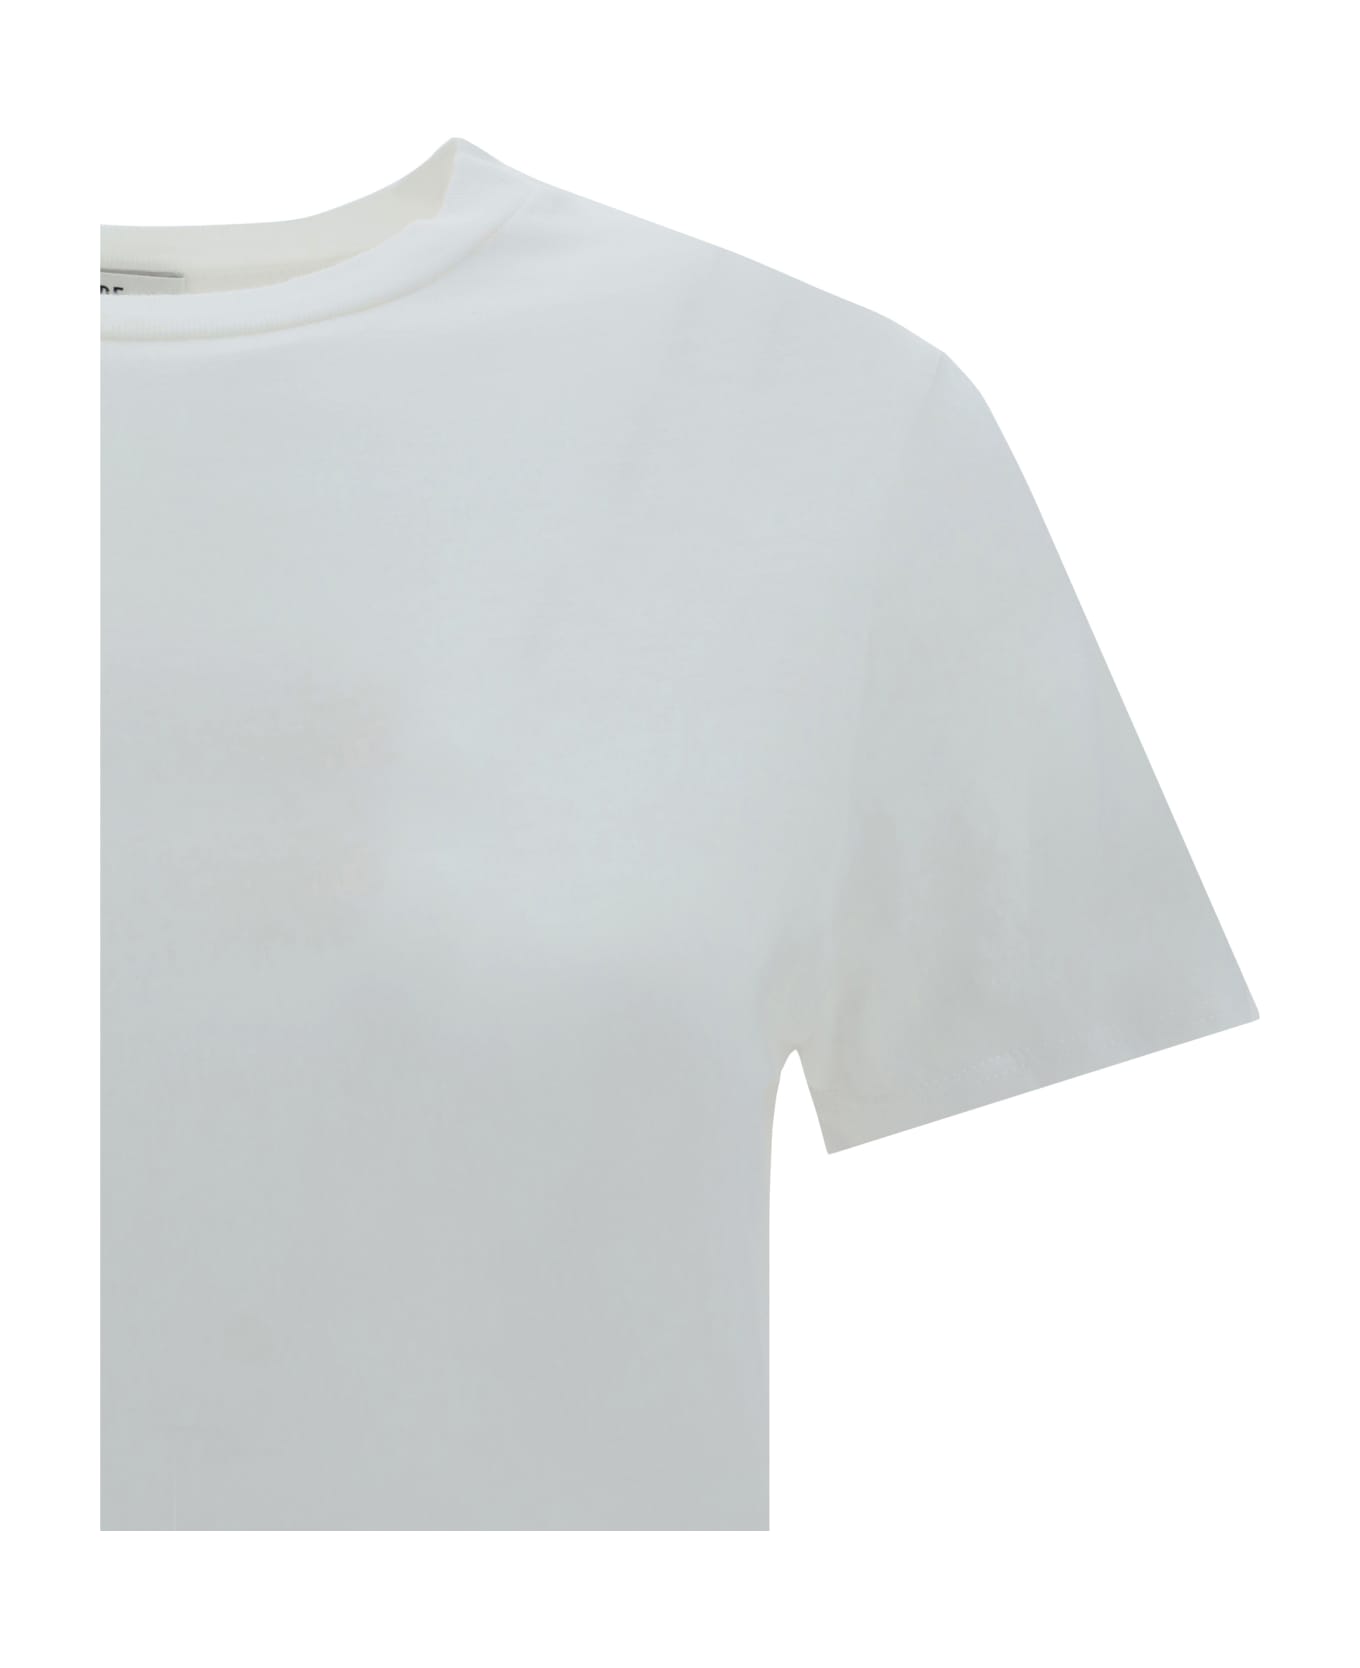 AGOLDE Annise T-shirt - White